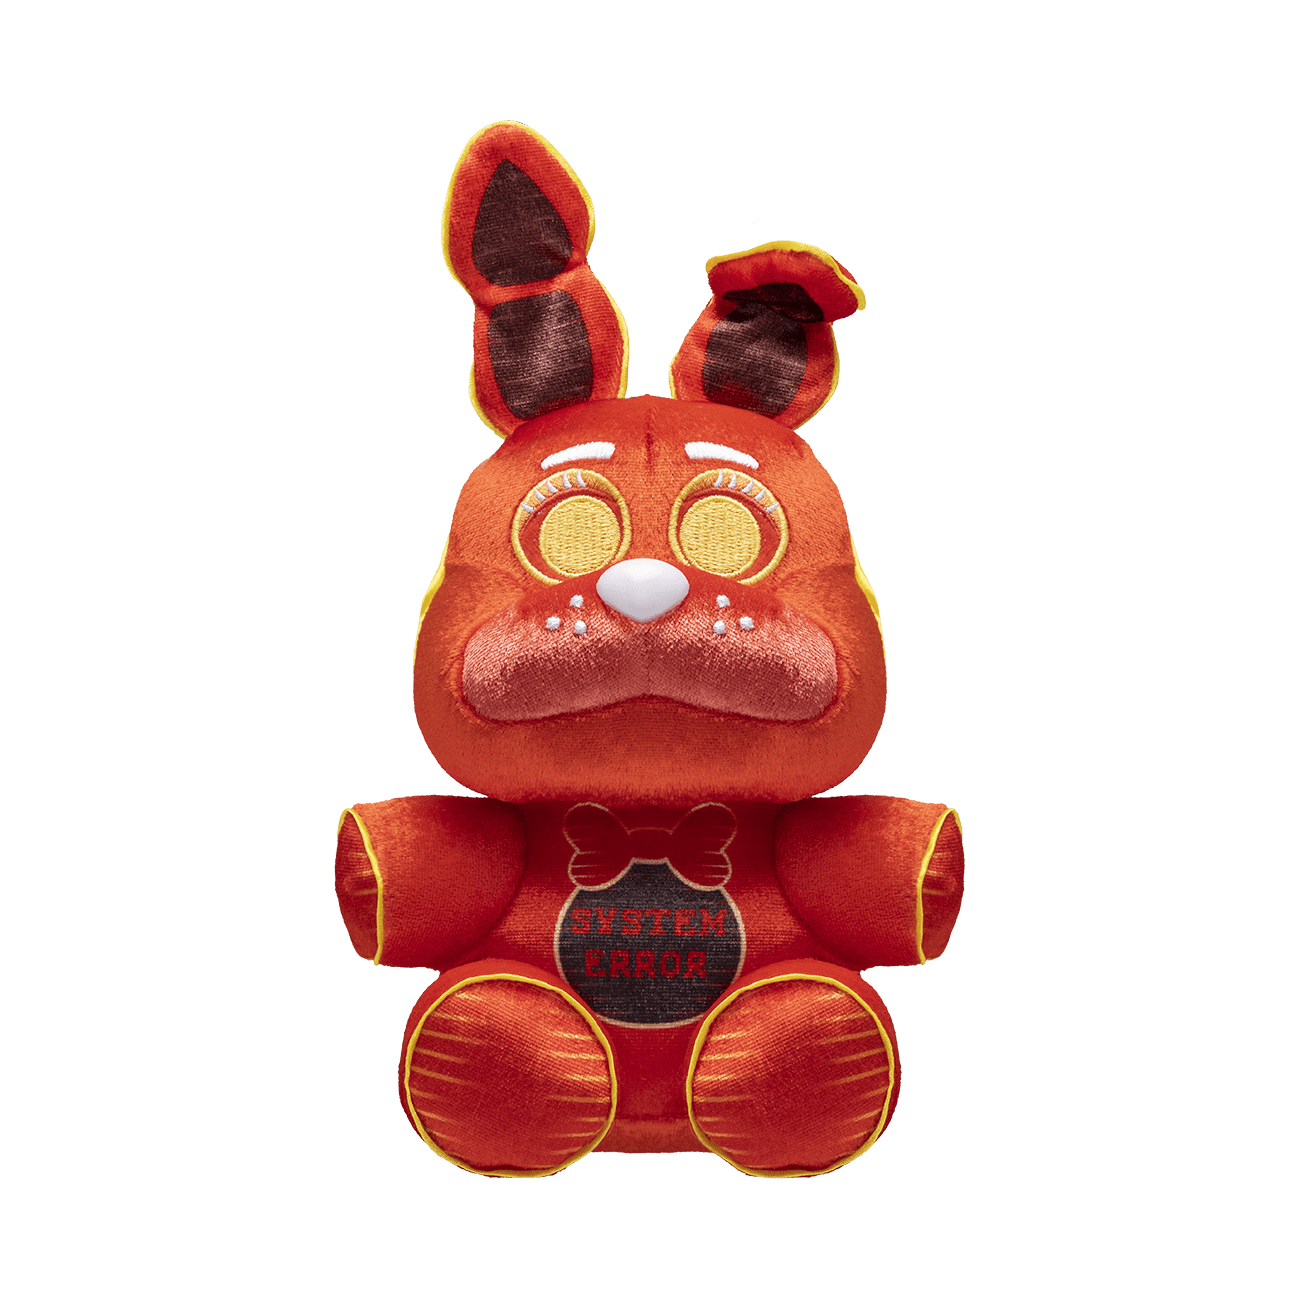 FNAF Plushies - All Characters(7) - - Plush: Chica, Springtrap, Bonnie,  Marionette, Foxy Plush - Plush-FNAF Plush-Kid's Toy-Stuffed Animal